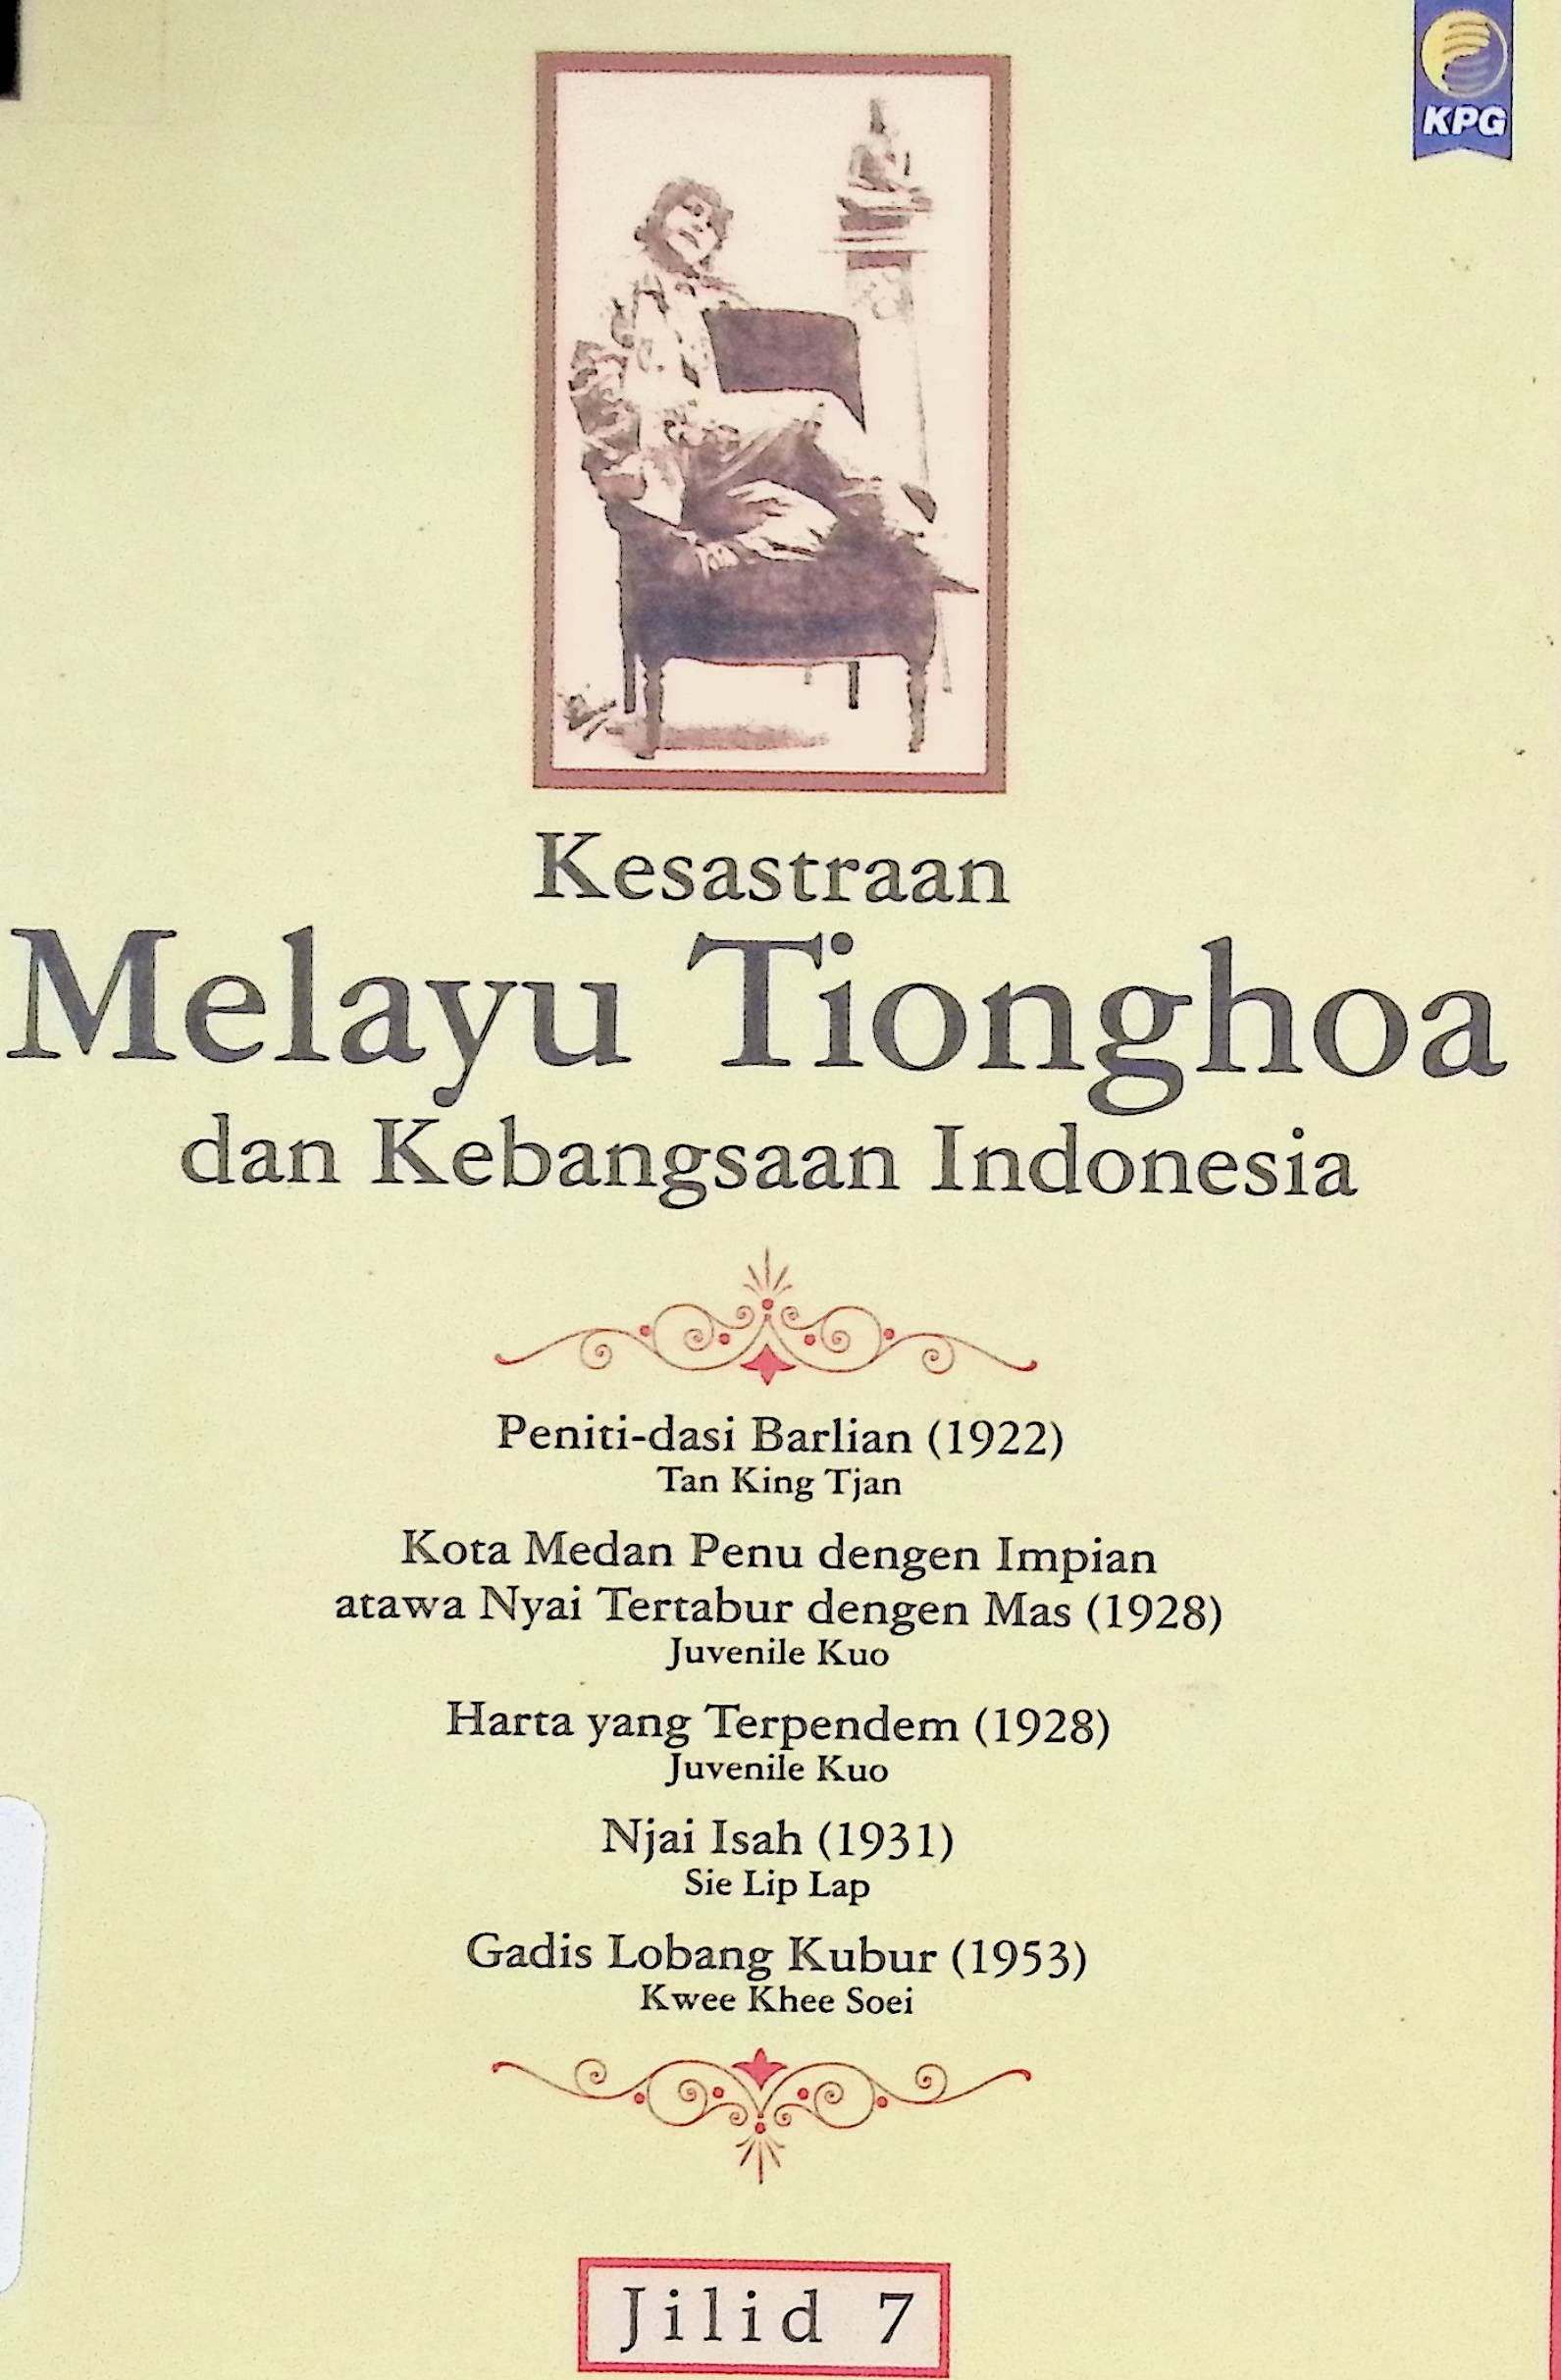 Kesusastraan Melayu Tionghoa dan kebangsaan Indonesia jilid 7